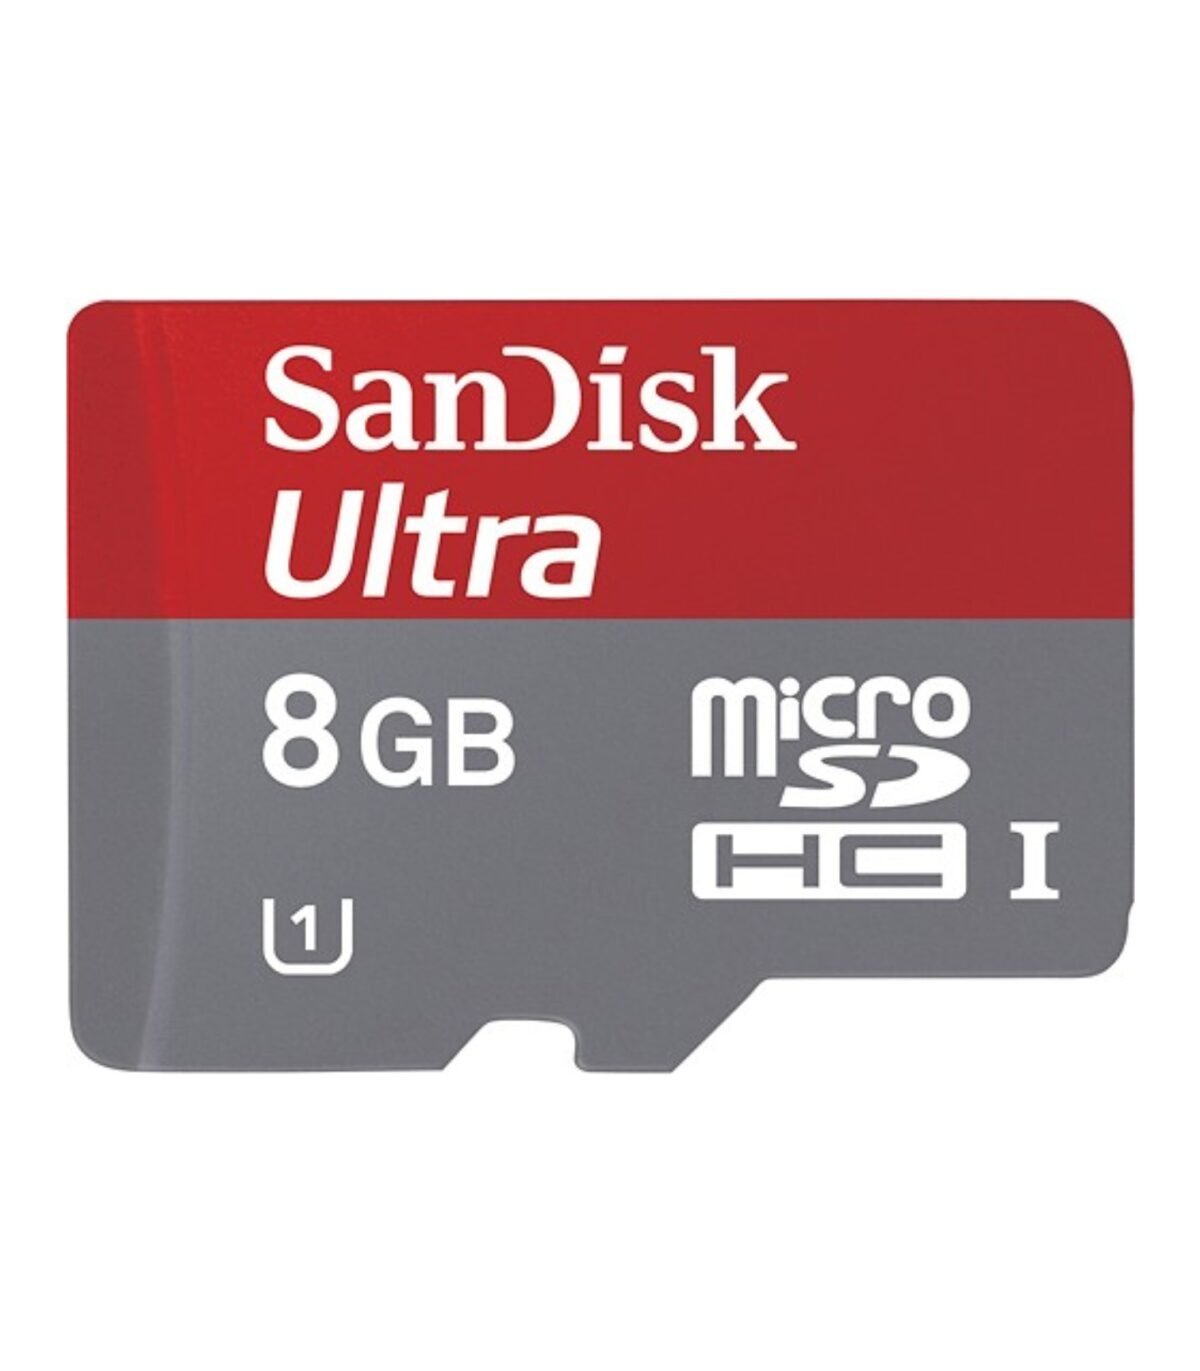 8 GB SanDisk Memory Card